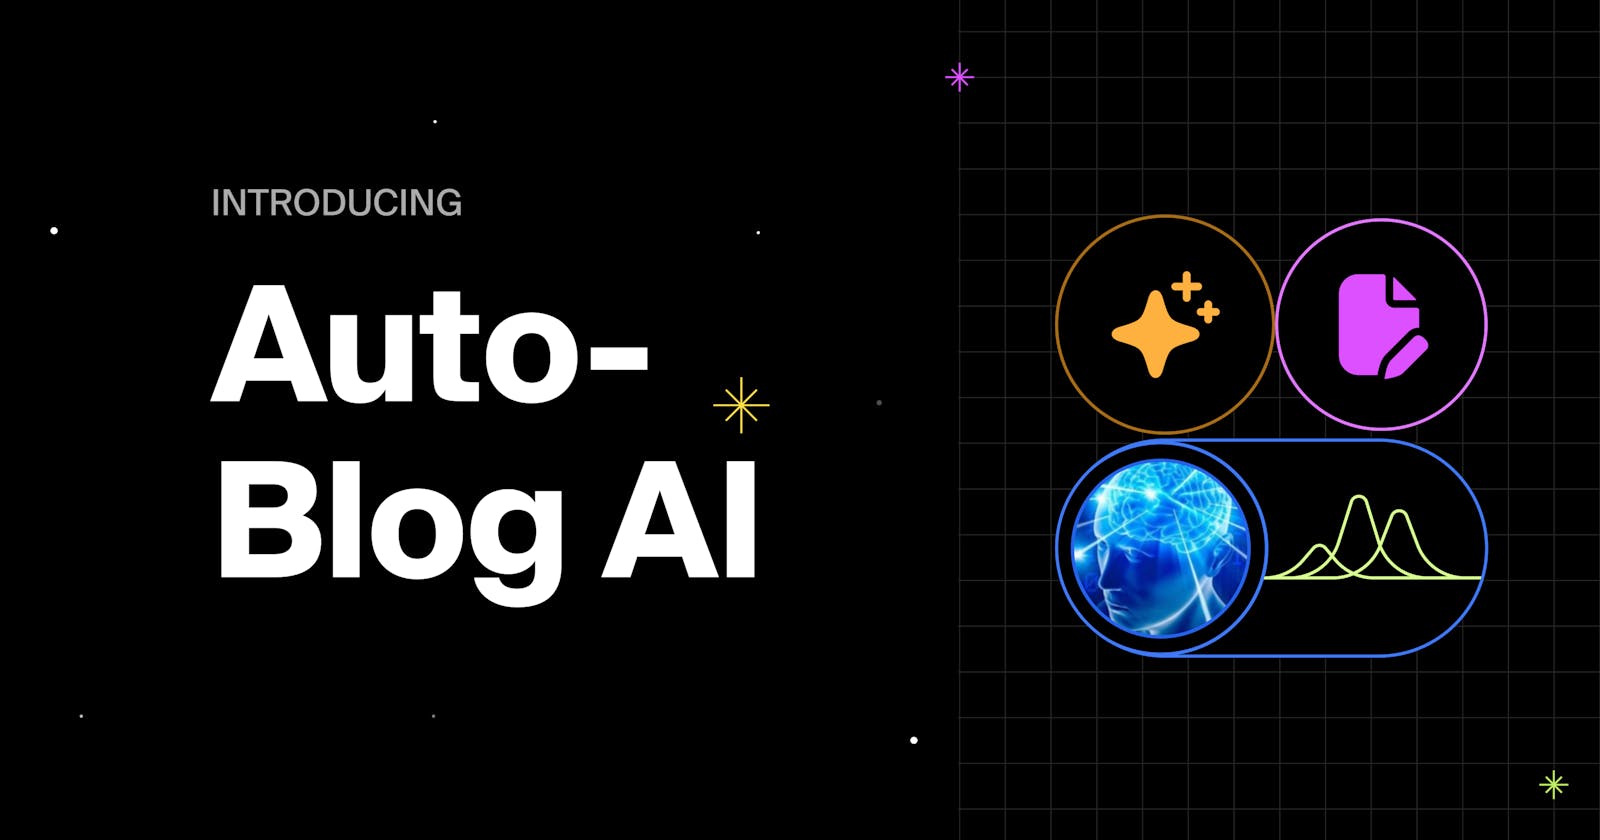 Introducing Auto-Blog AI: Blog while you nap! 😴 ✨